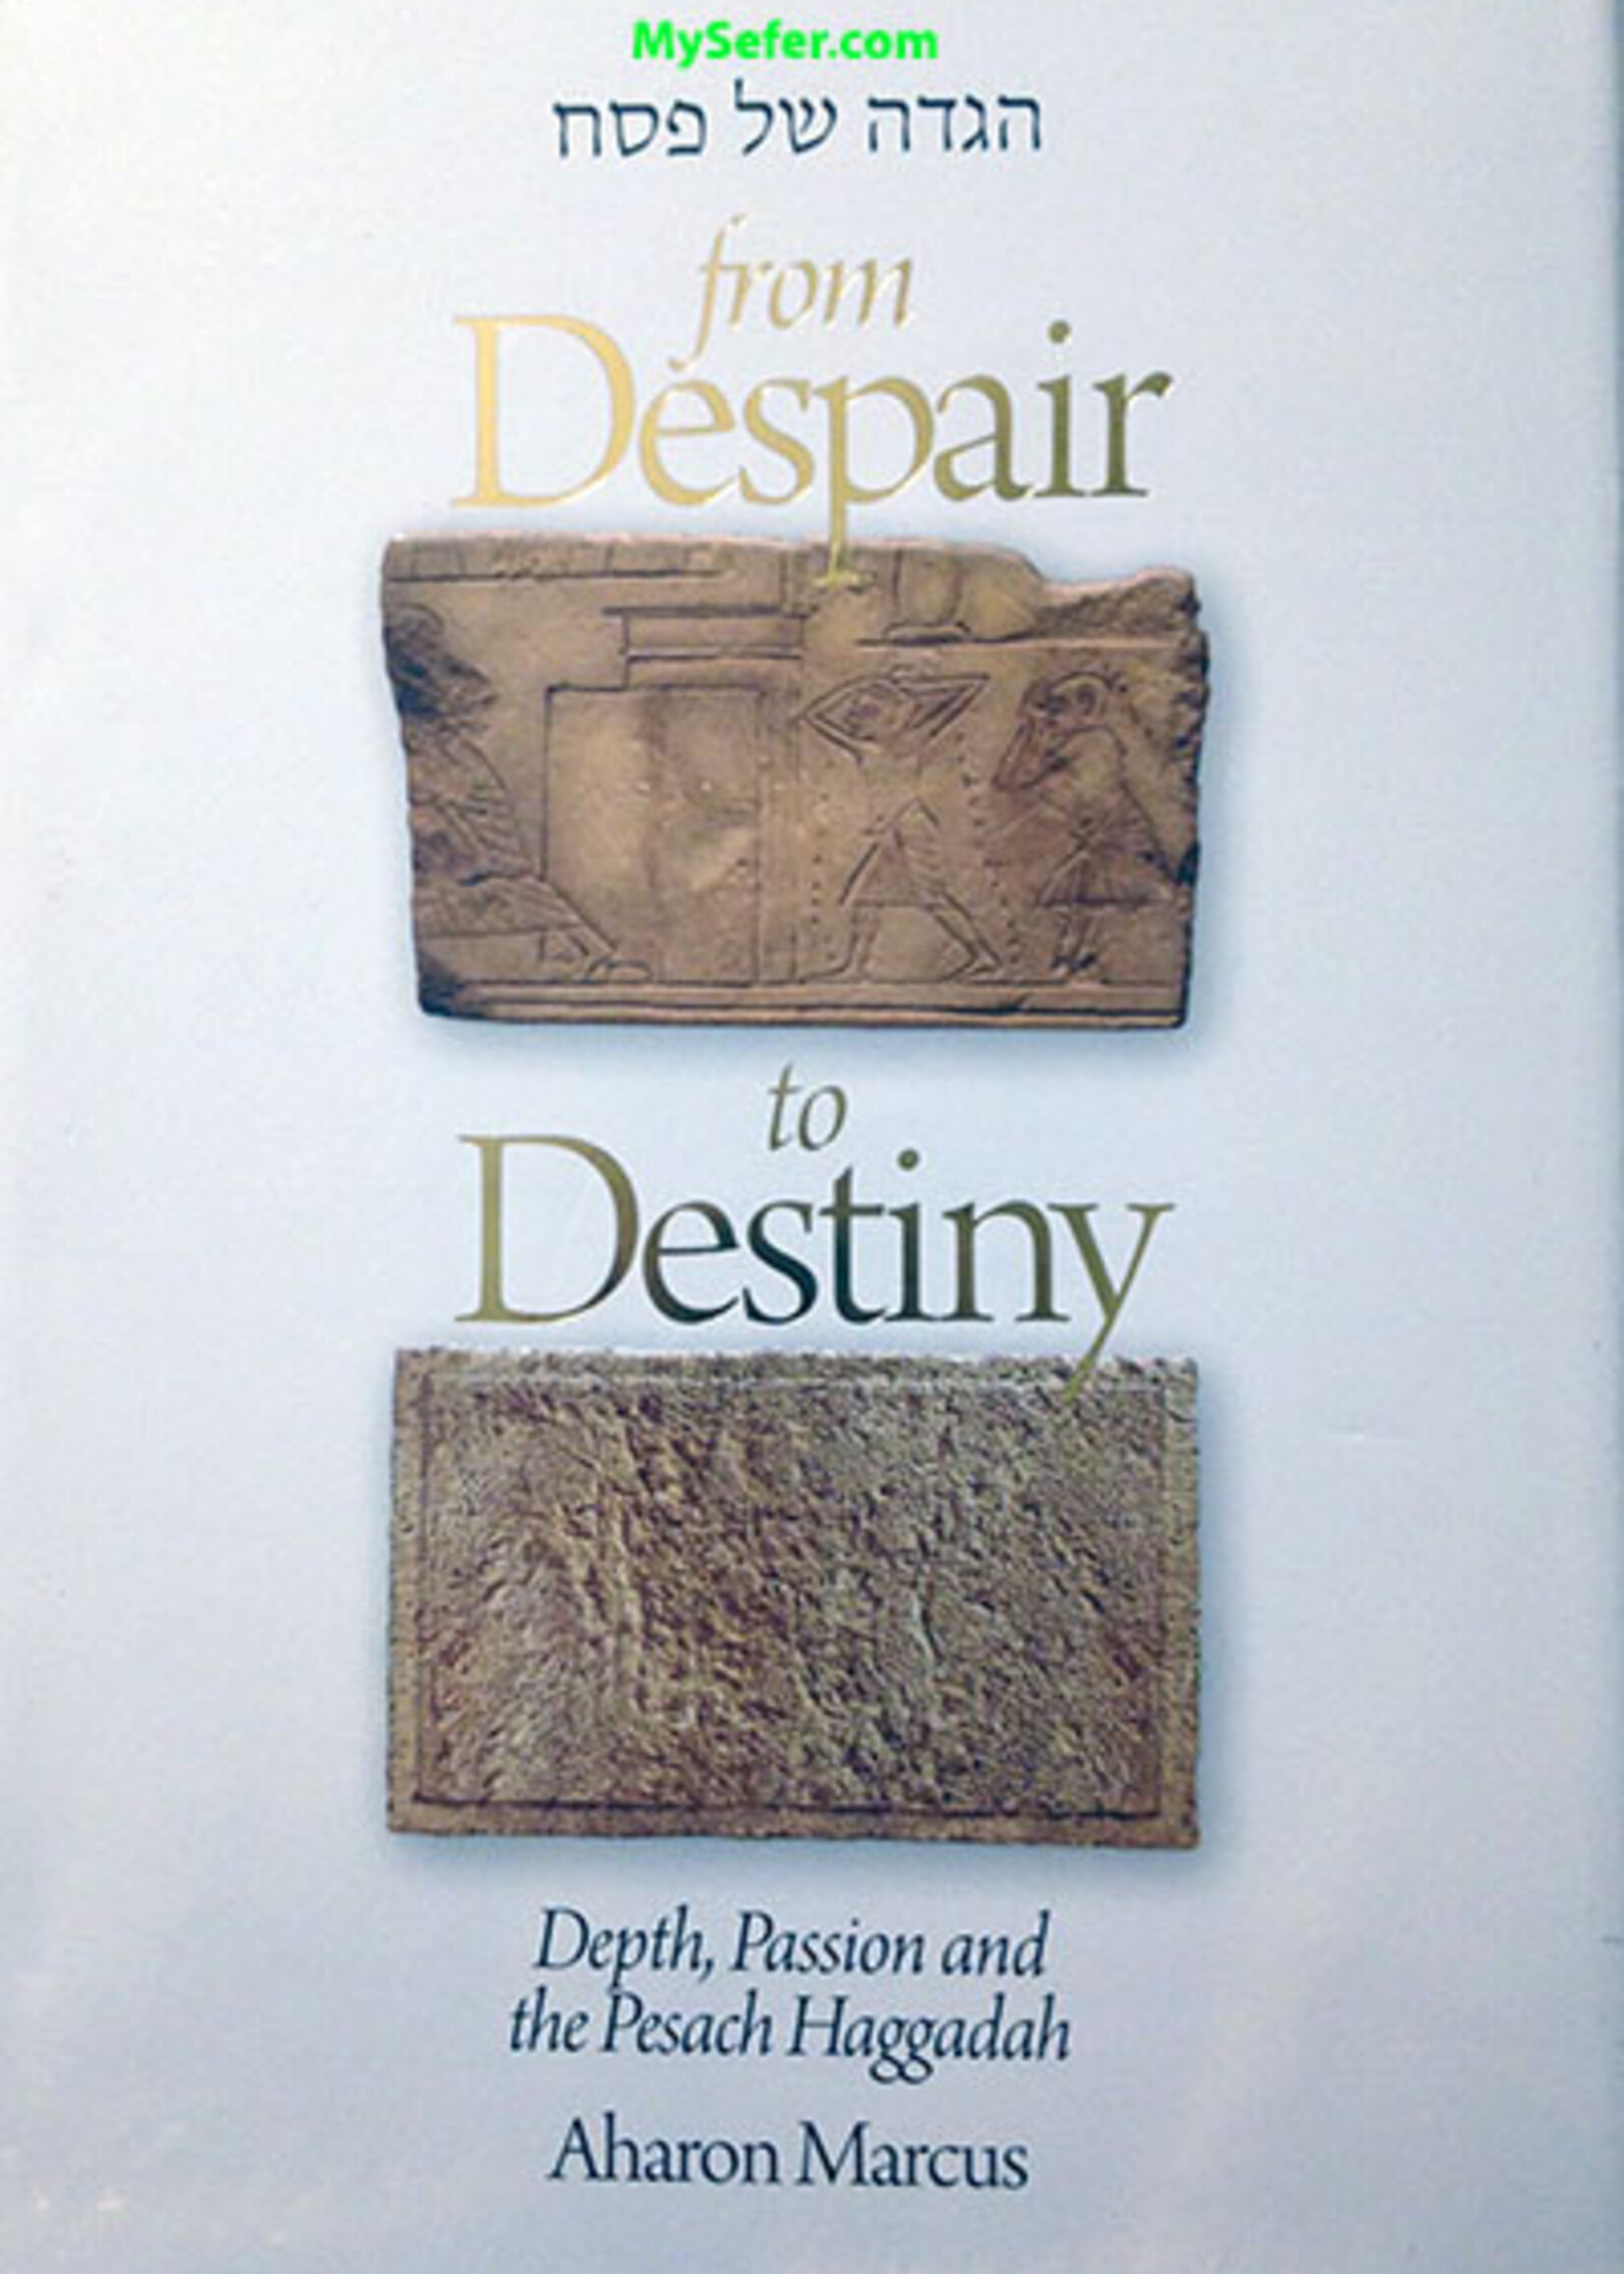 Rabbi AHARON mARCUS Haggadah Shel Pesach: From Despair To Destiny"